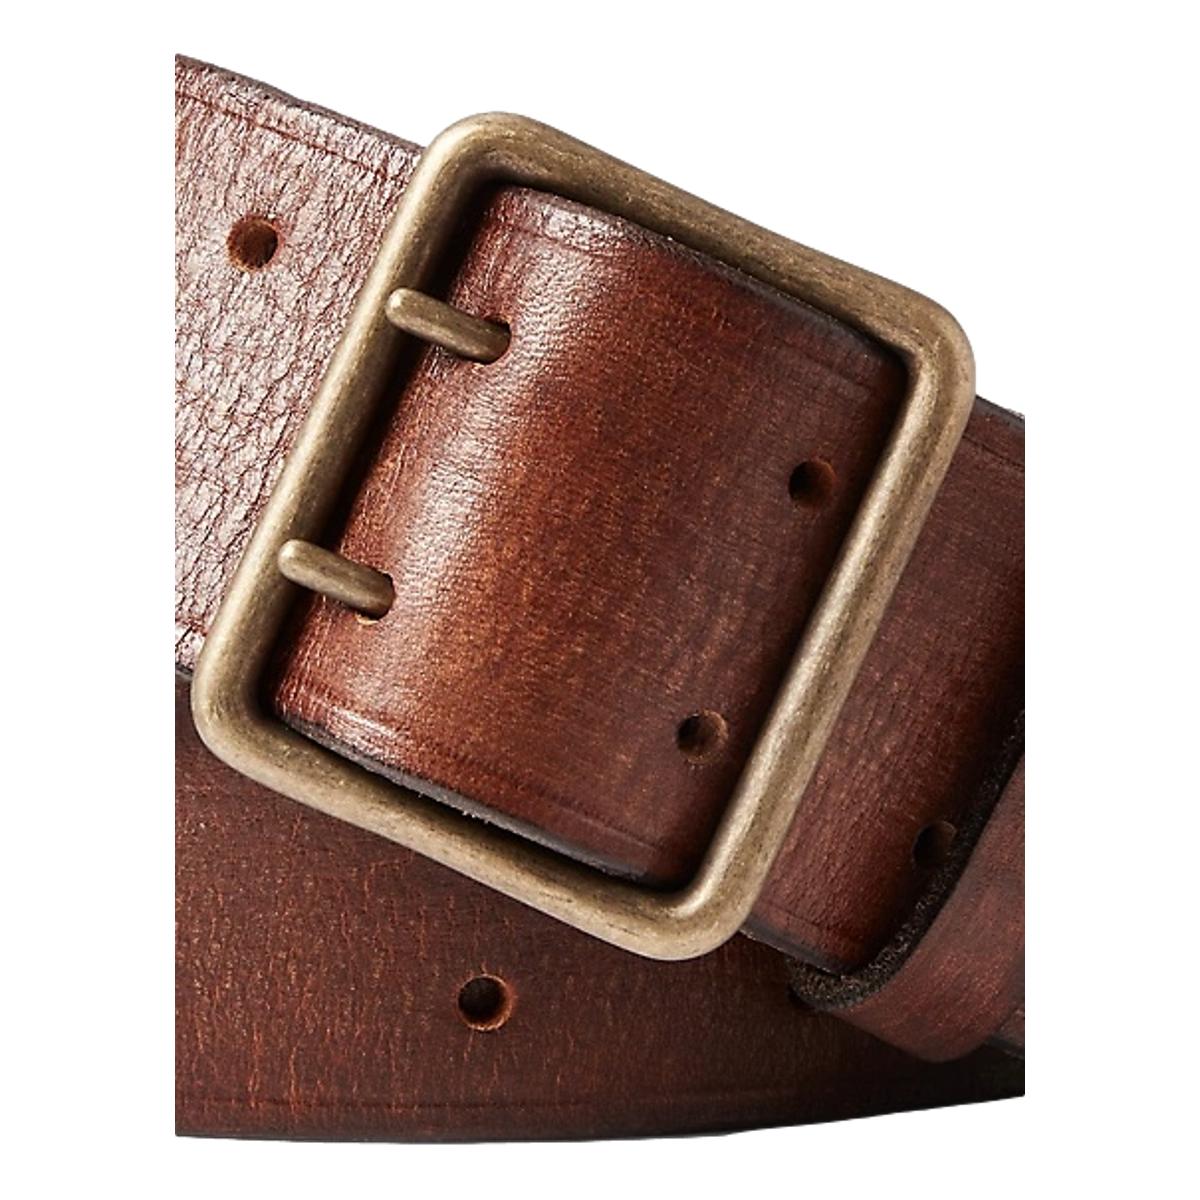 Leather Double-Prong Belt Vintage Brown - Belts